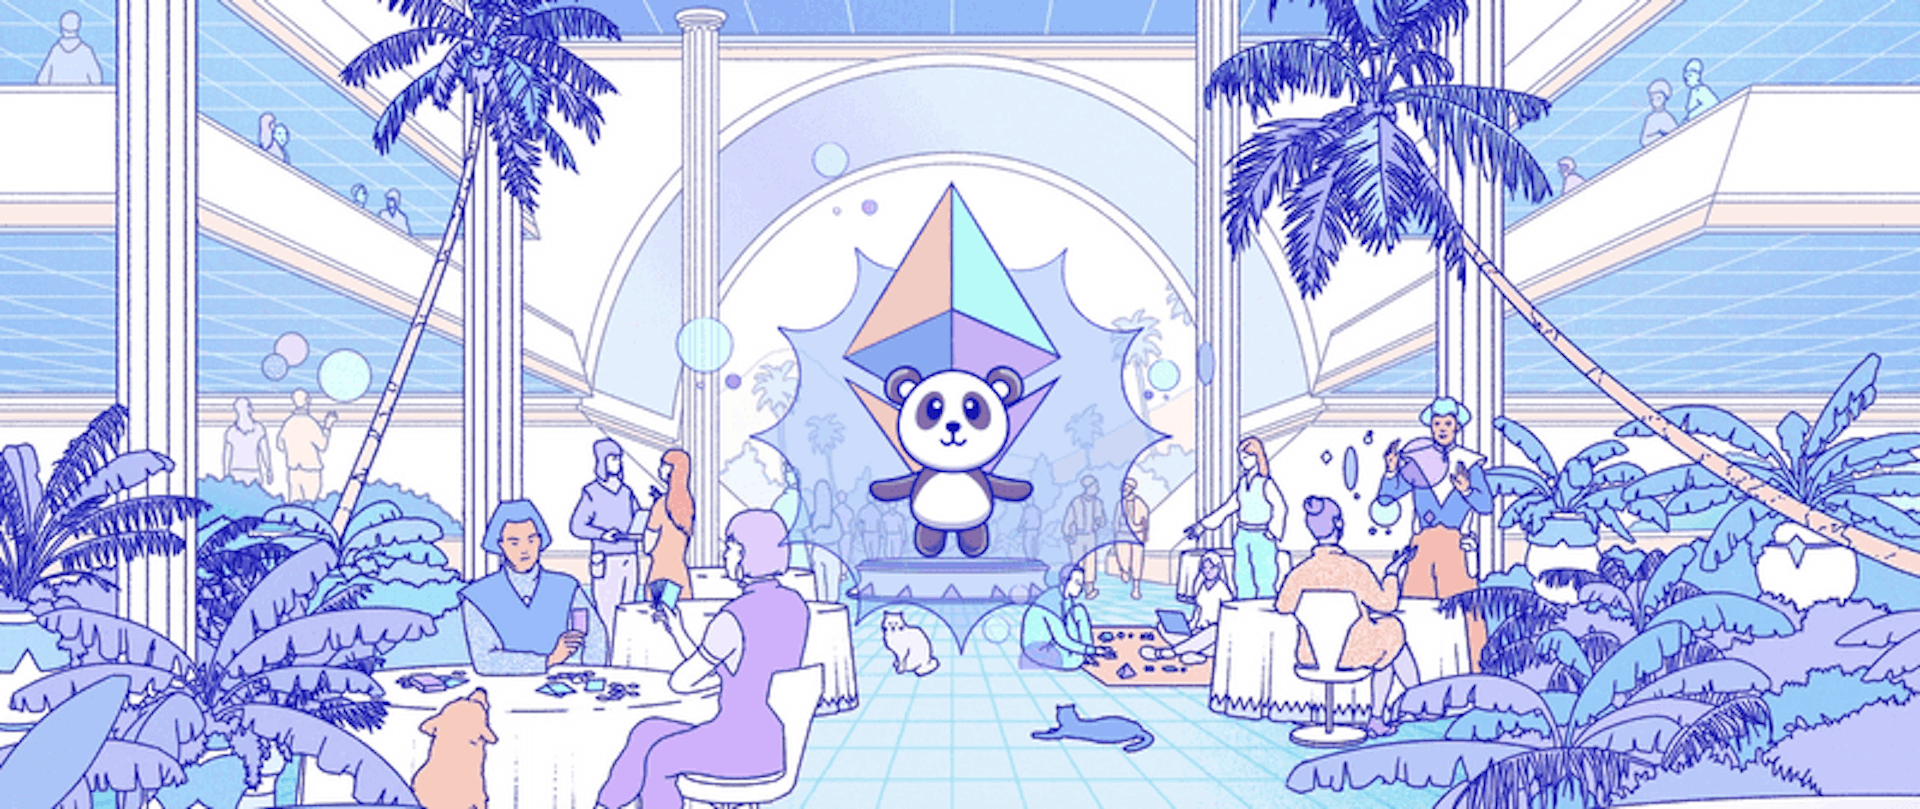 ethereum.org hero with merge panda